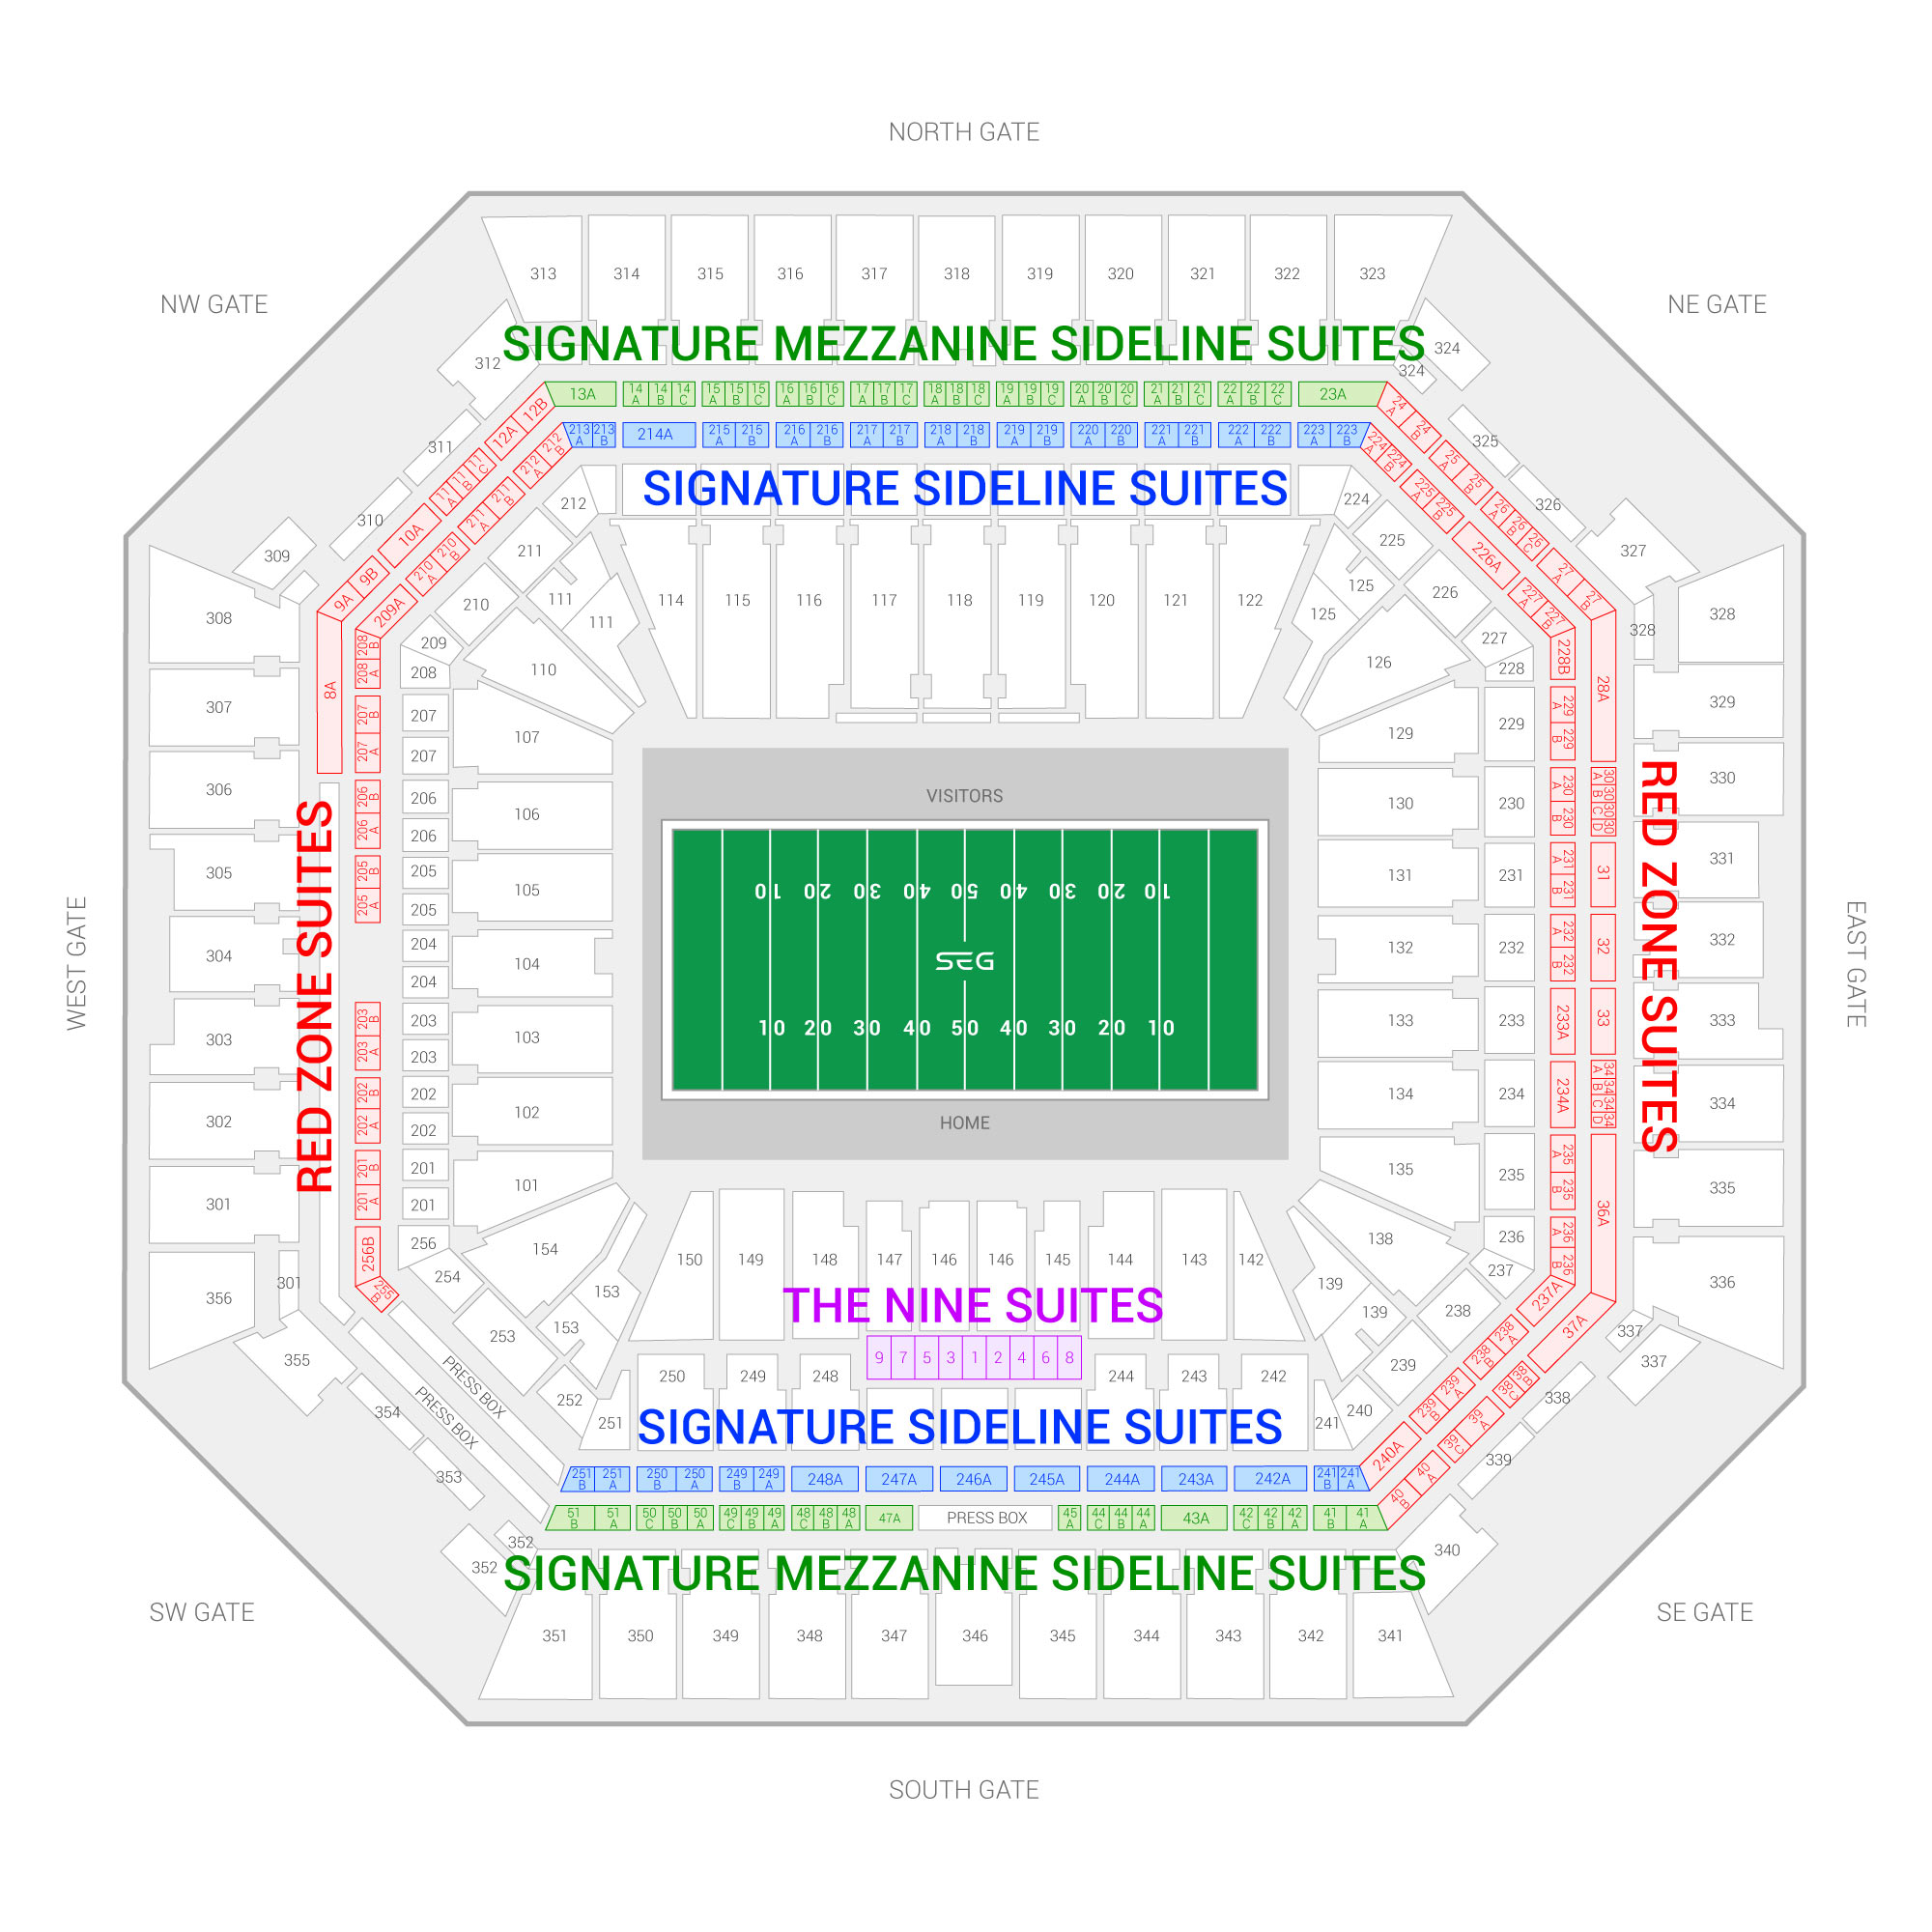 Super Bowl Seating Chart Houston